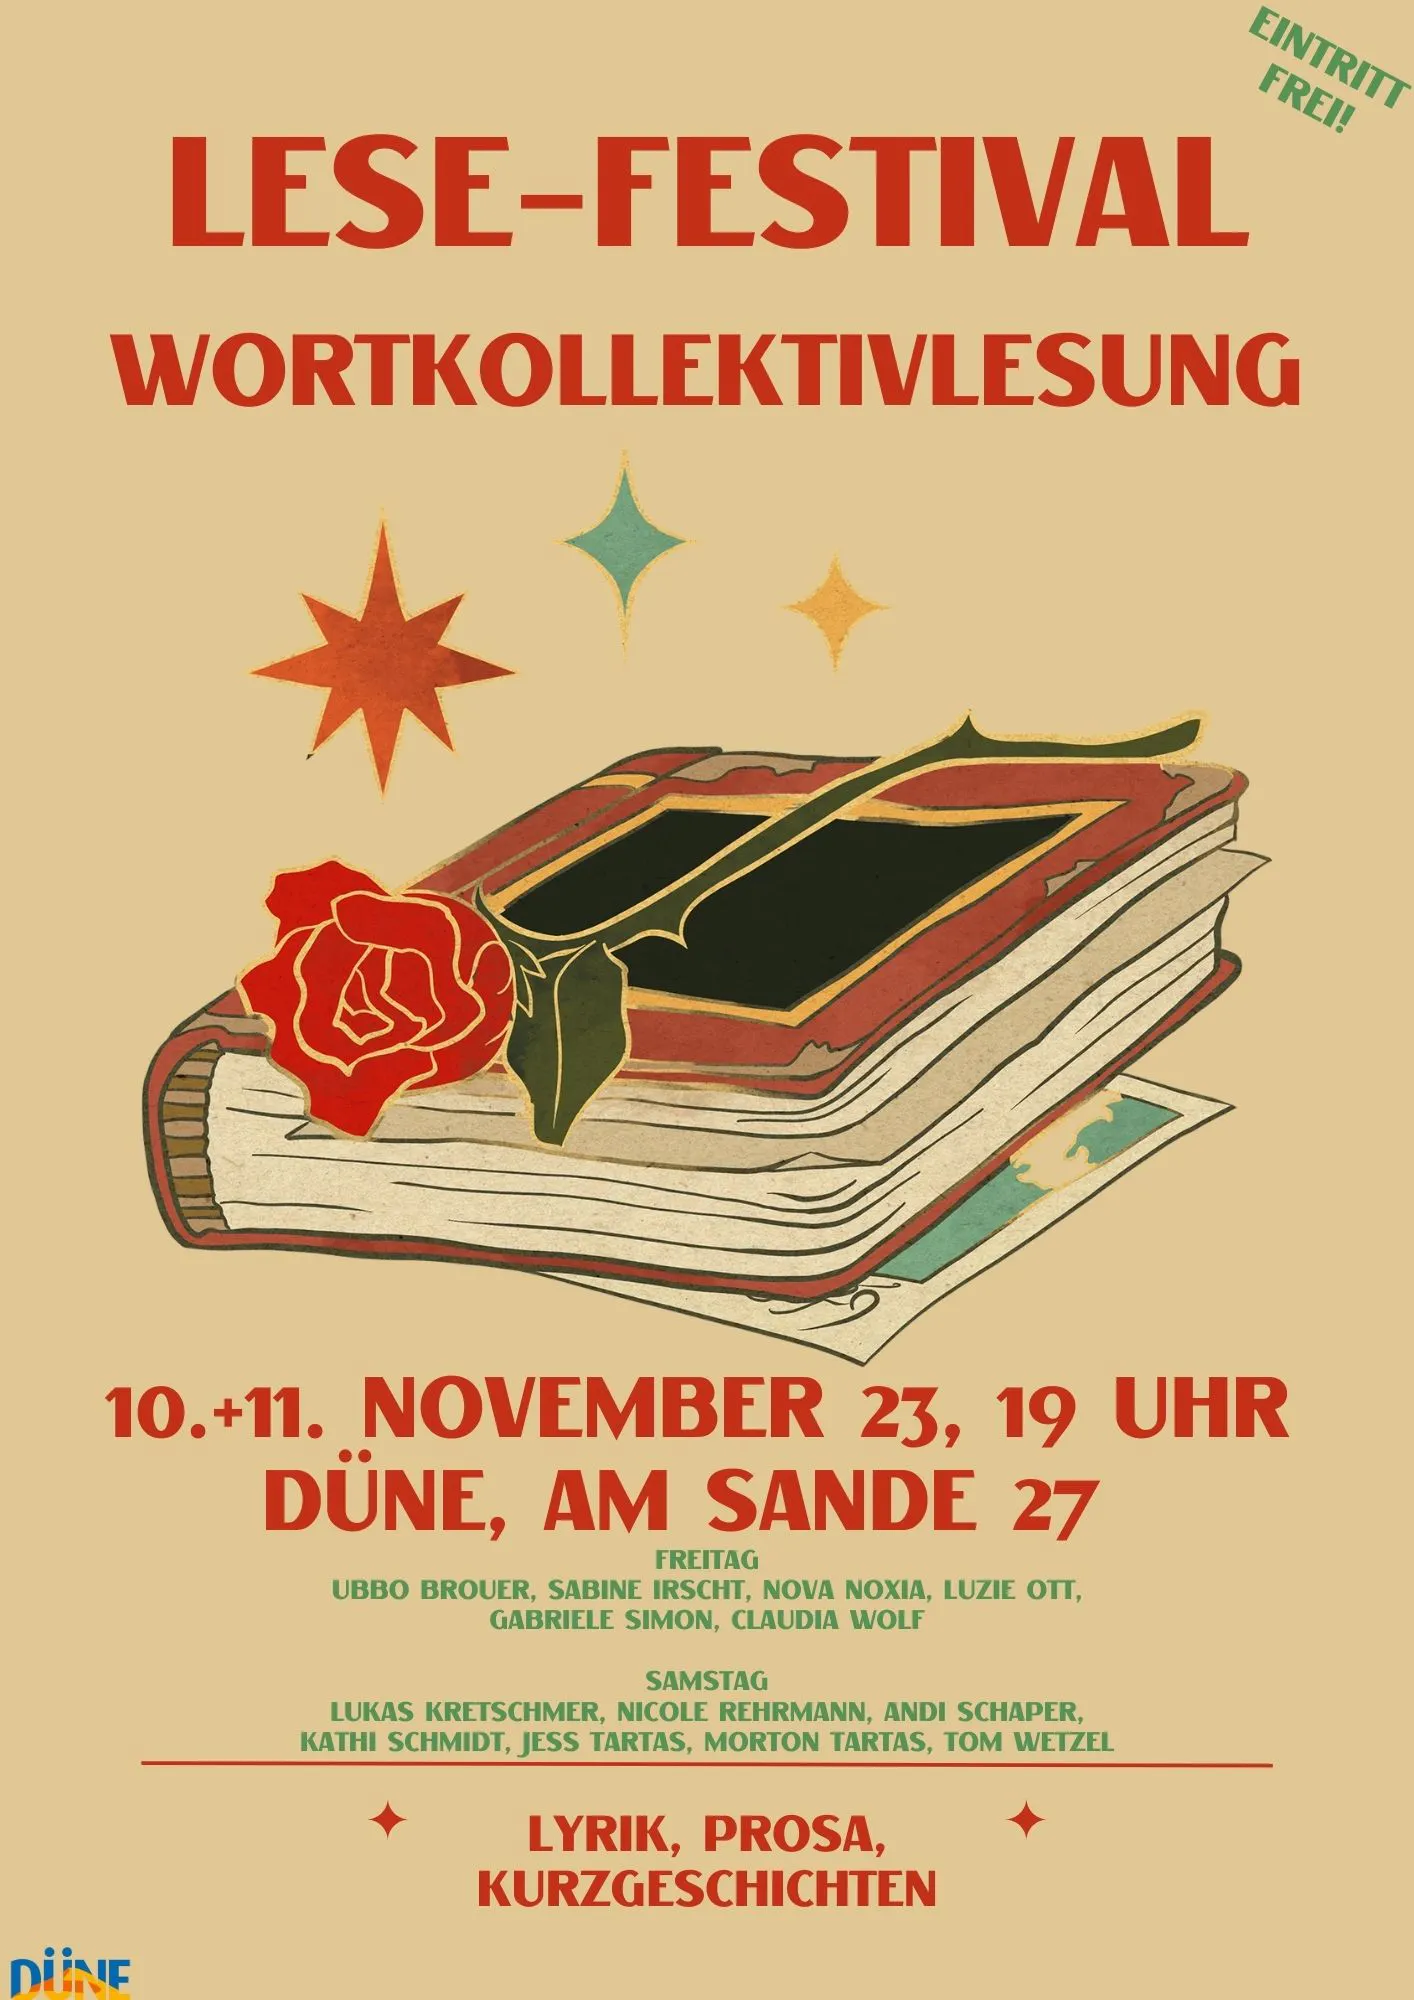 Lese-Festival. Wortkollektivlesung. 10. und 11. November um 19 Uhr. Düne, Am Sande 27. Lyrik, Prosa, Kurzgeschichten